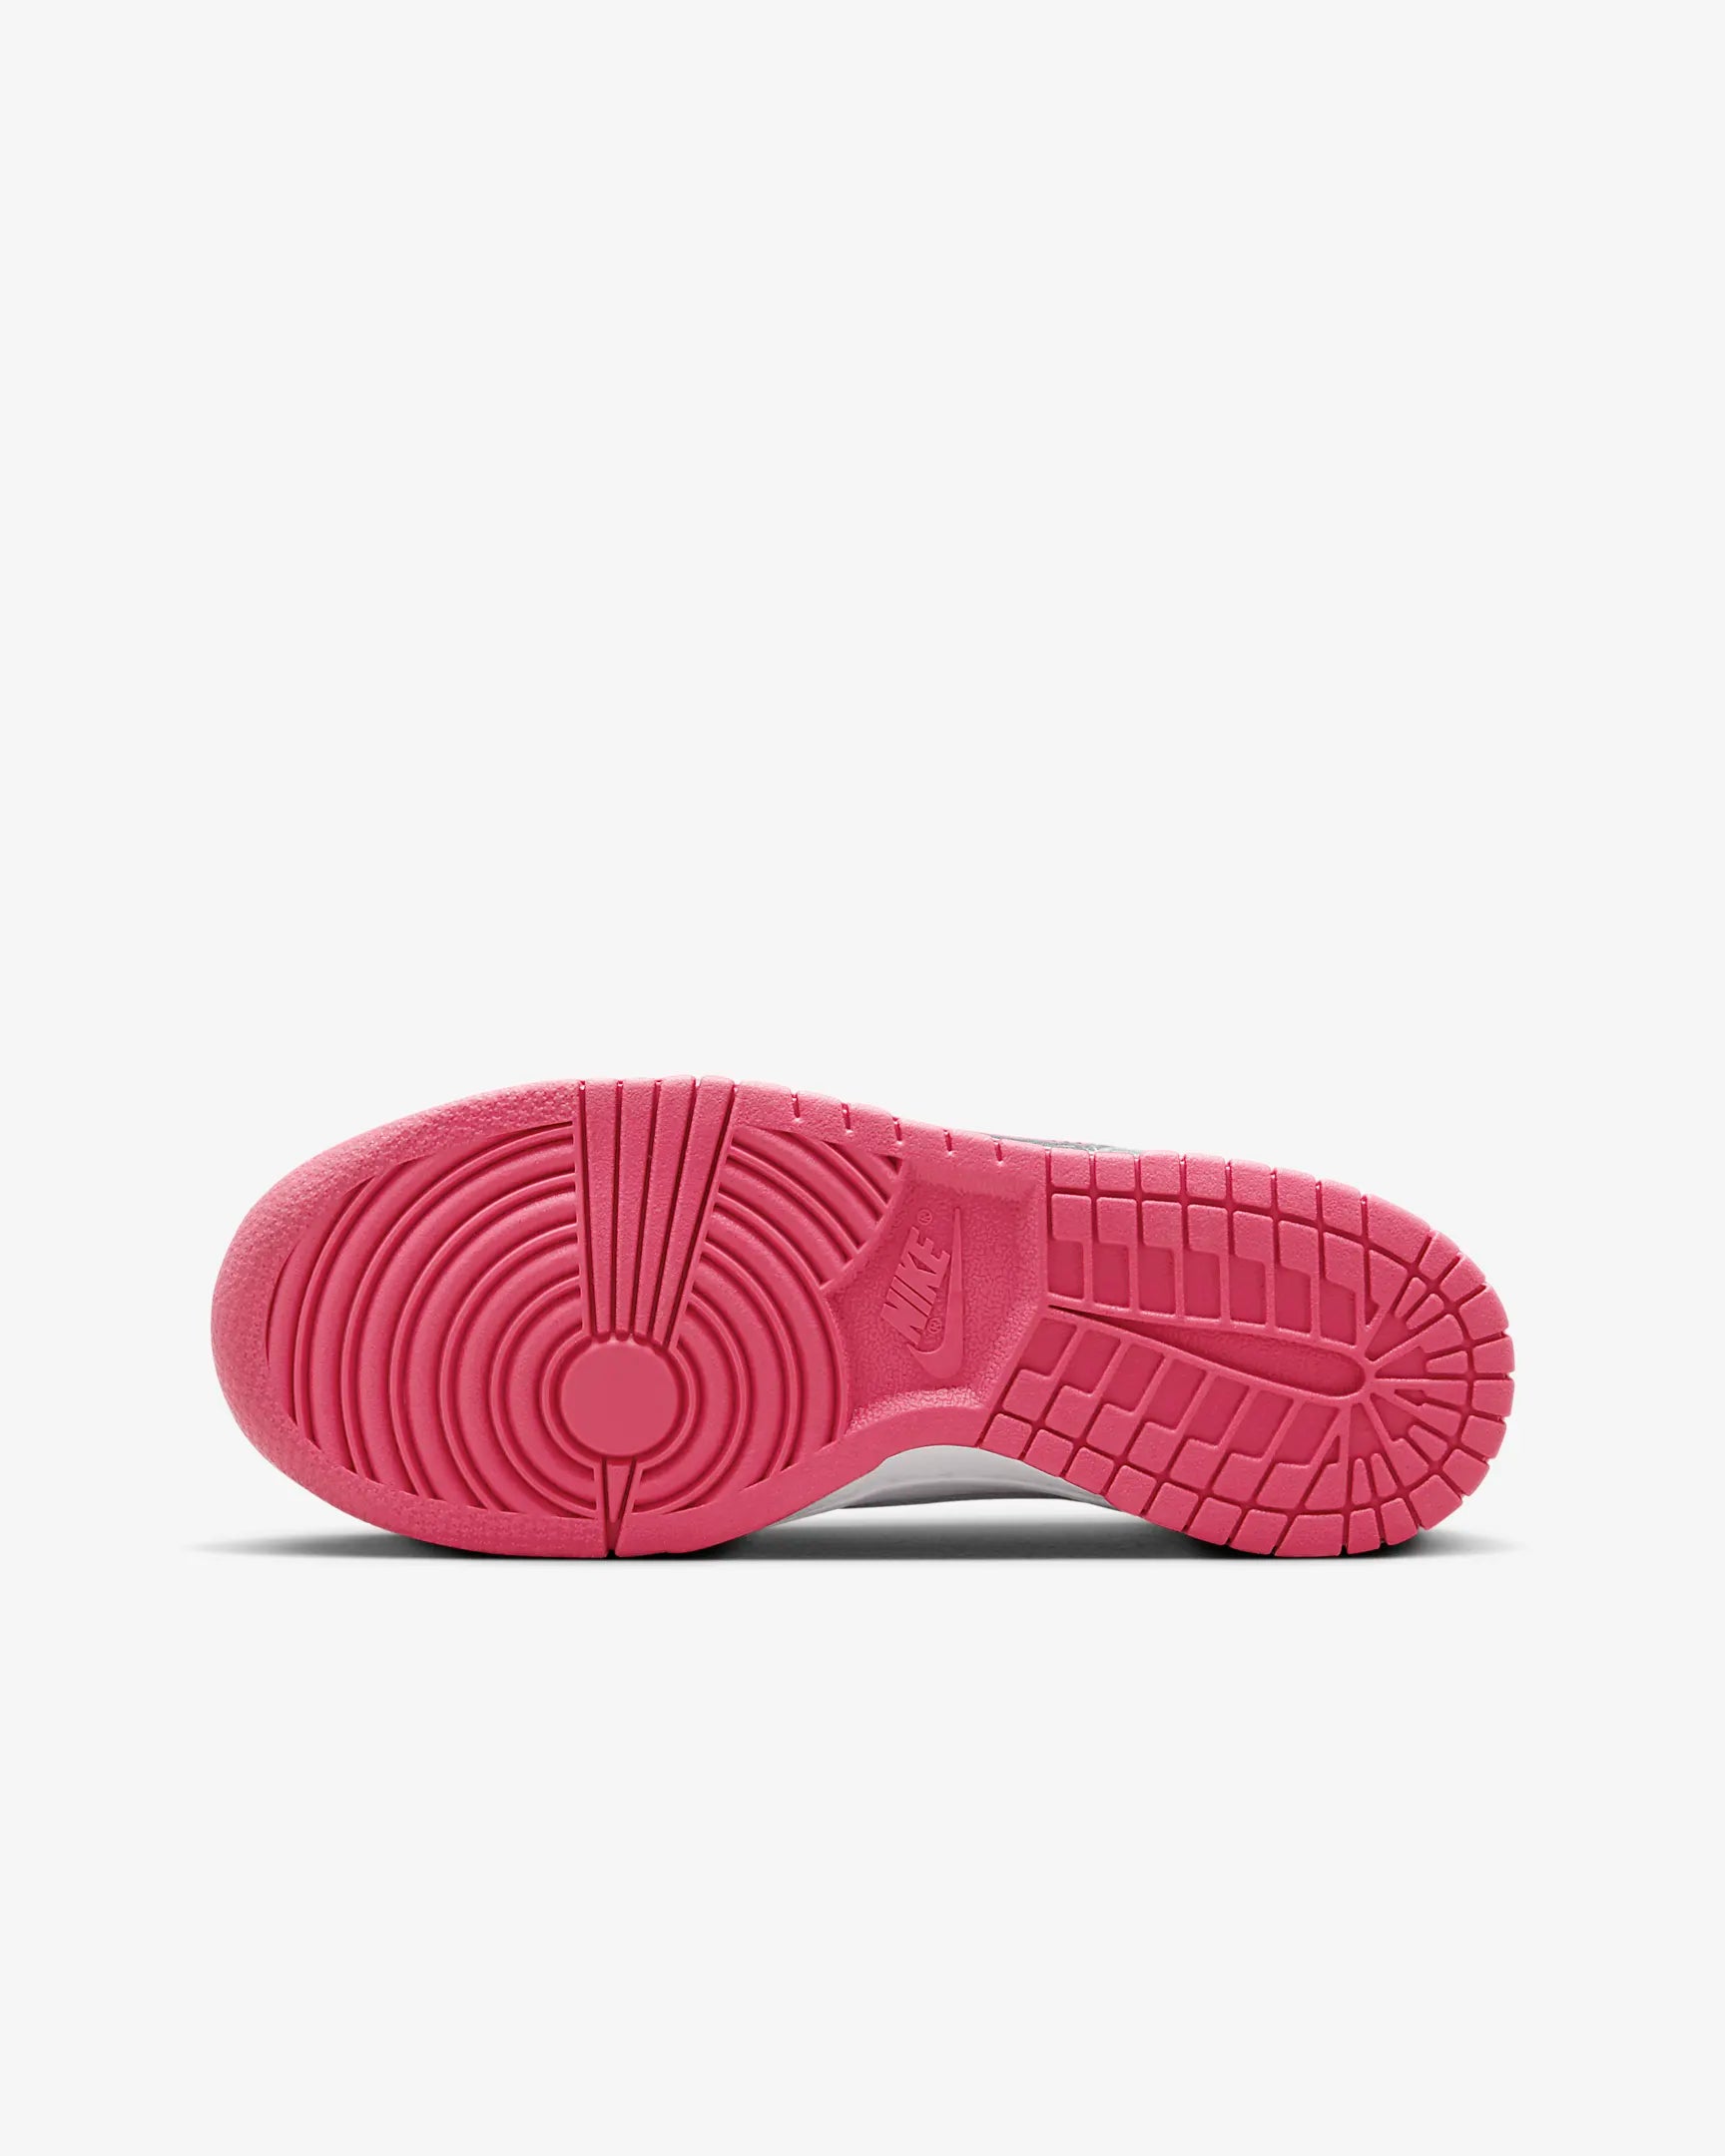 Nike Dunk Low 'Laser Fuchsia' (GS) - Funky Insole